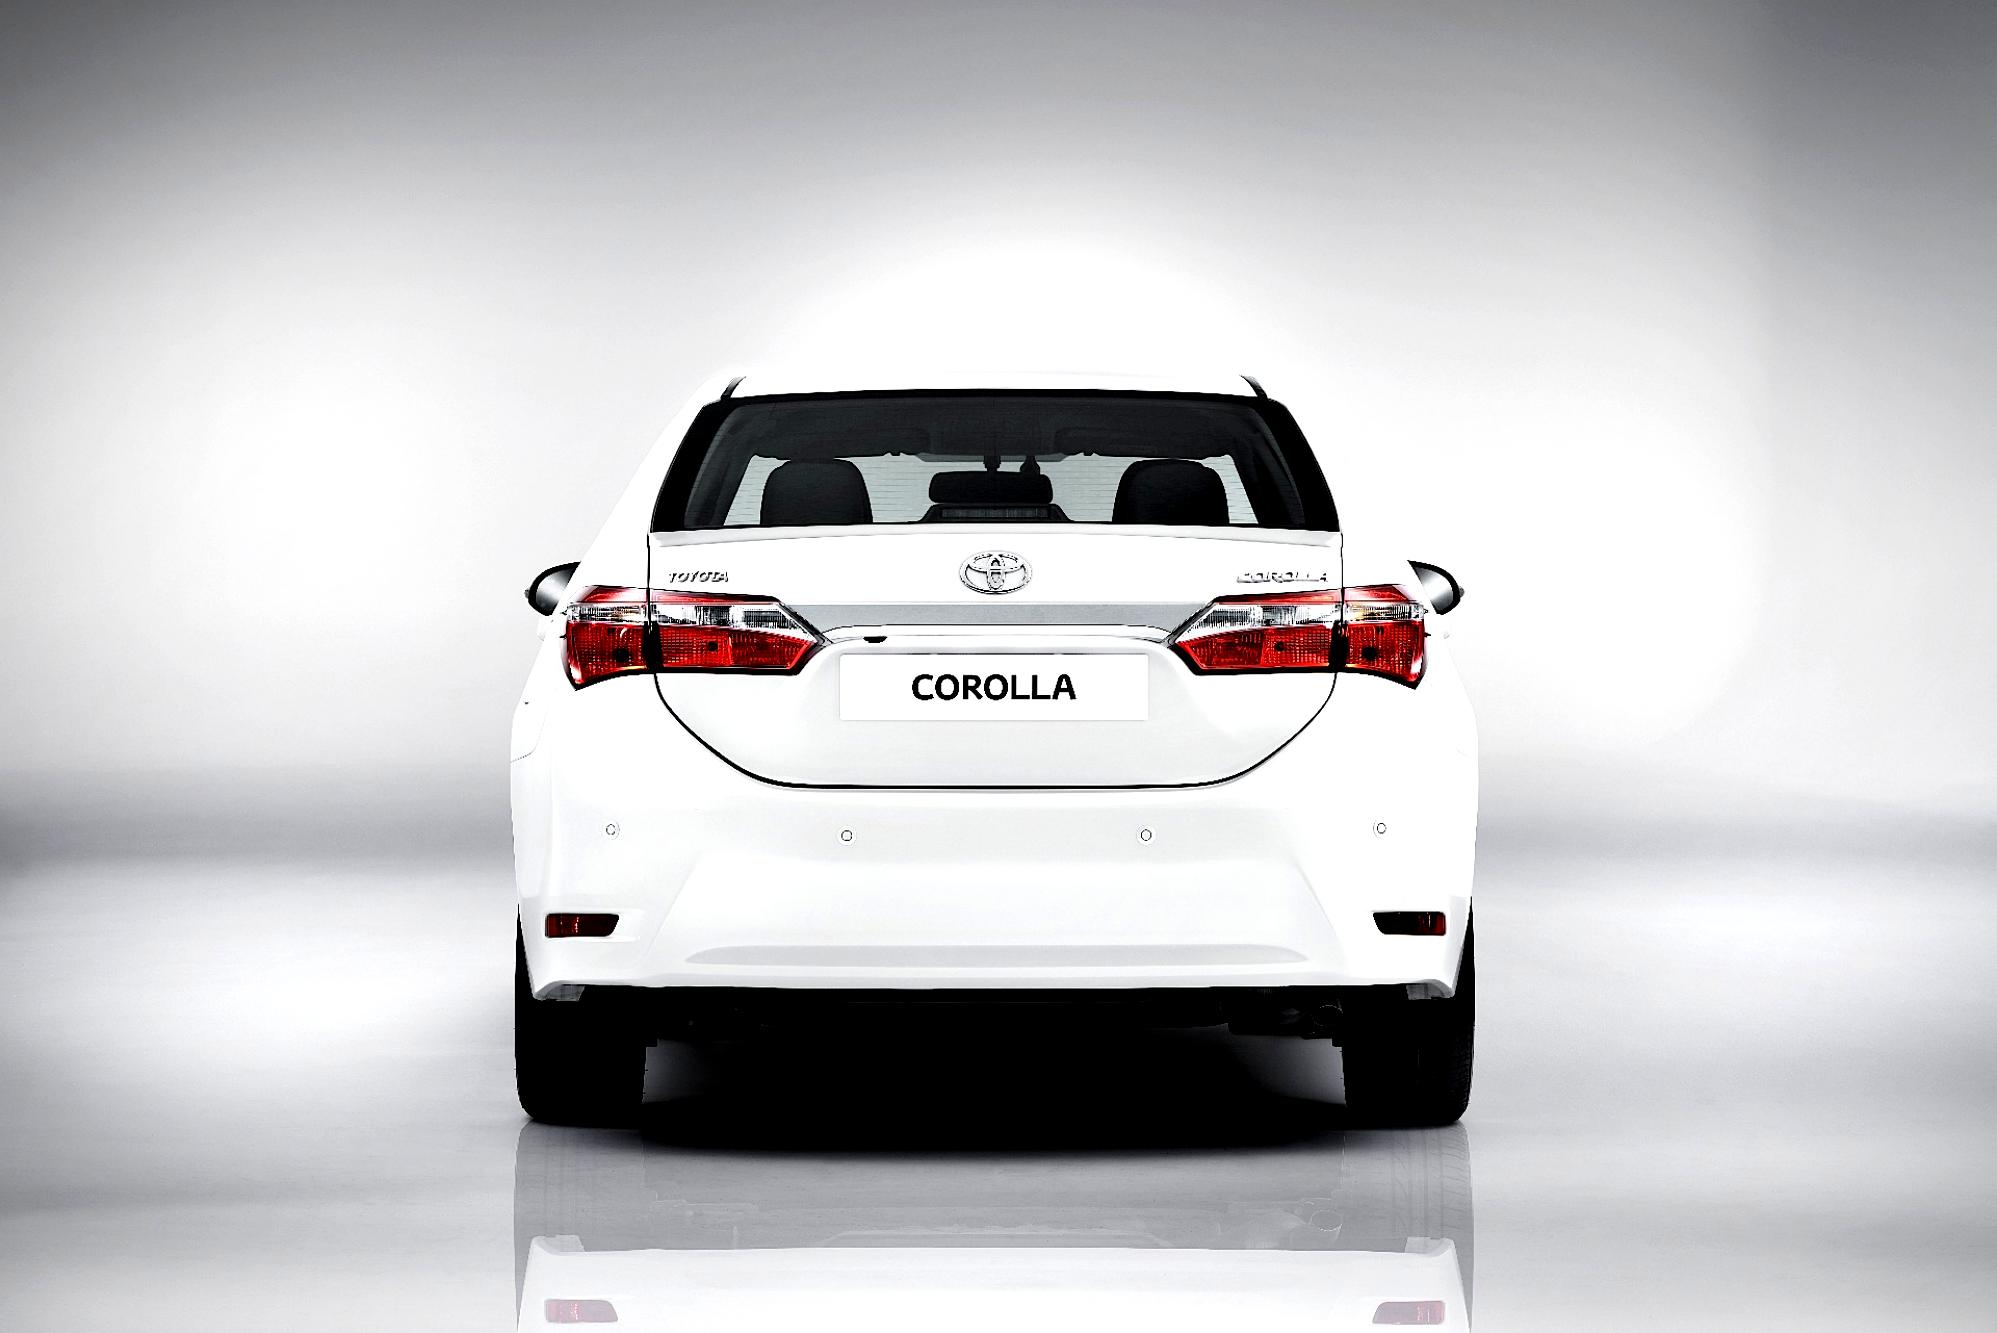 Toyota Corolla EU 2013 #103